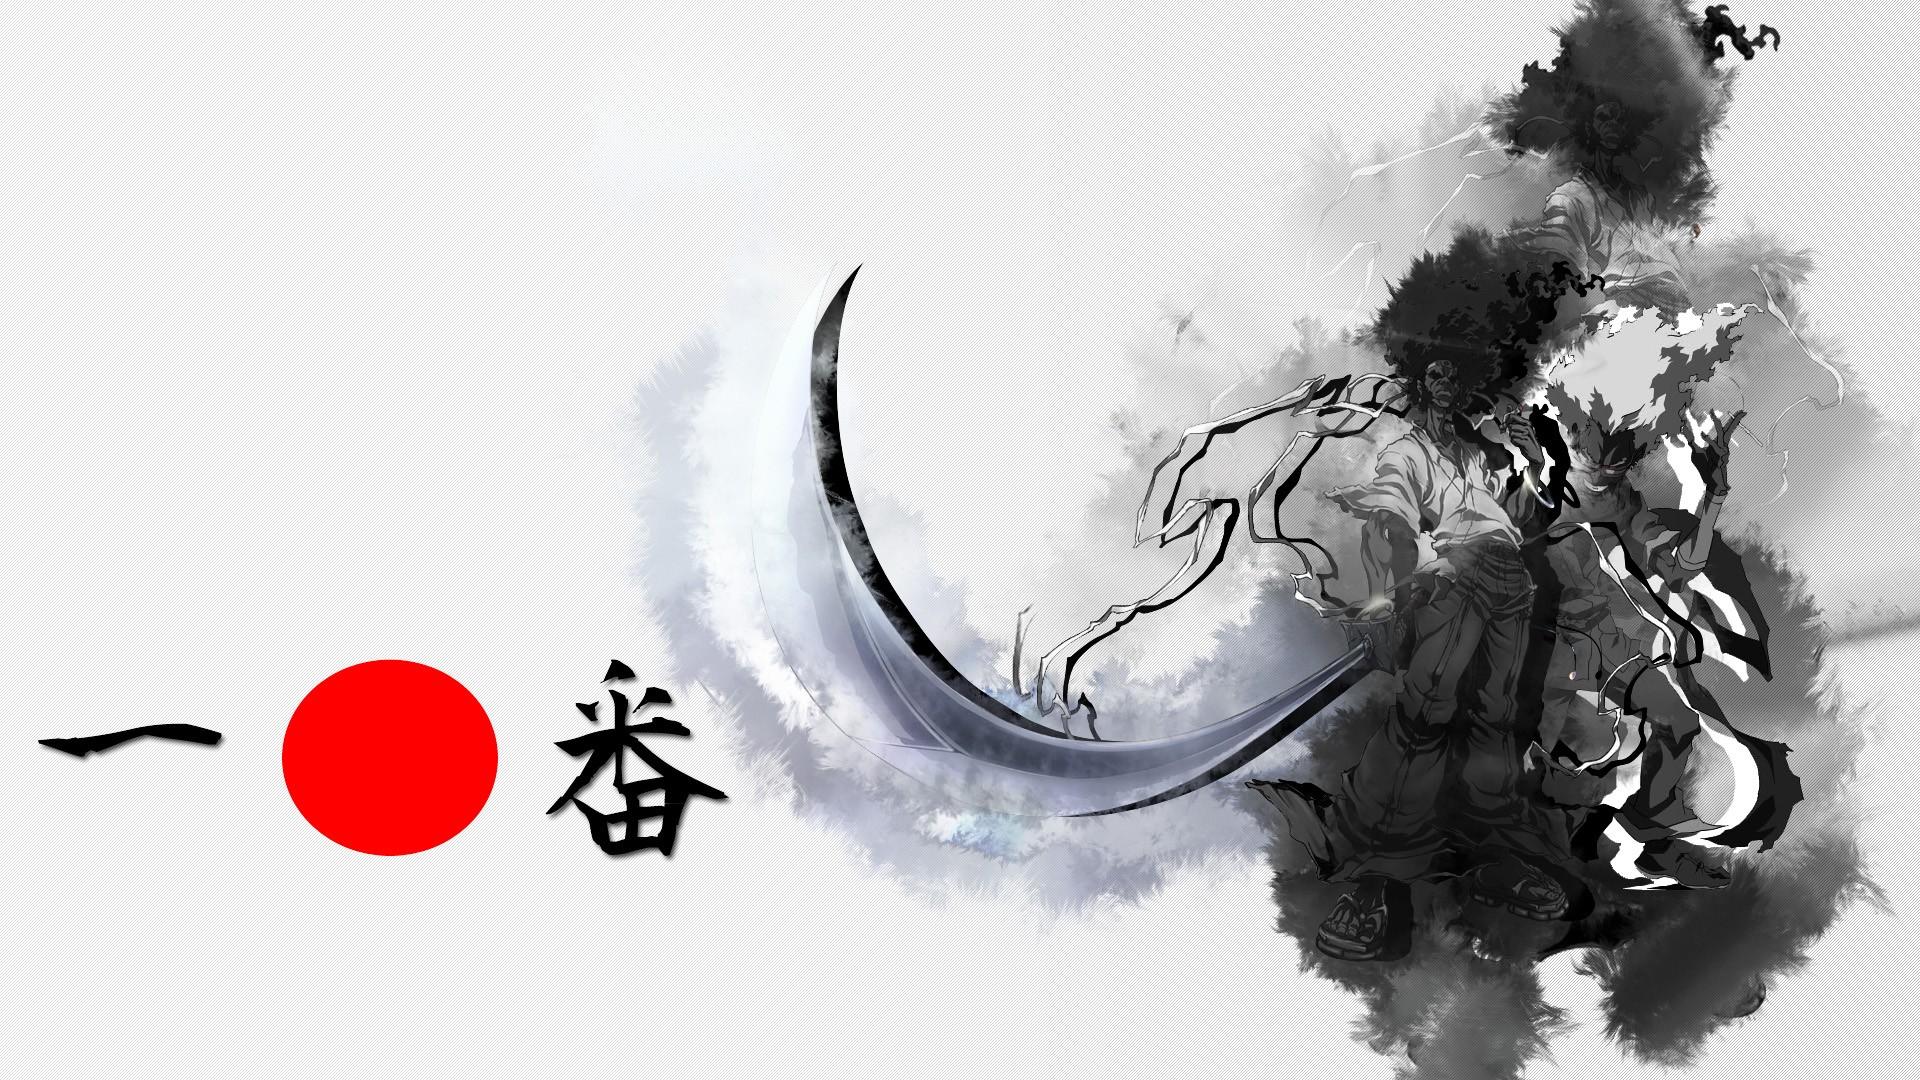 Afro Samurai Anime Wallpaper HD Wallpaper Desktop Image Download